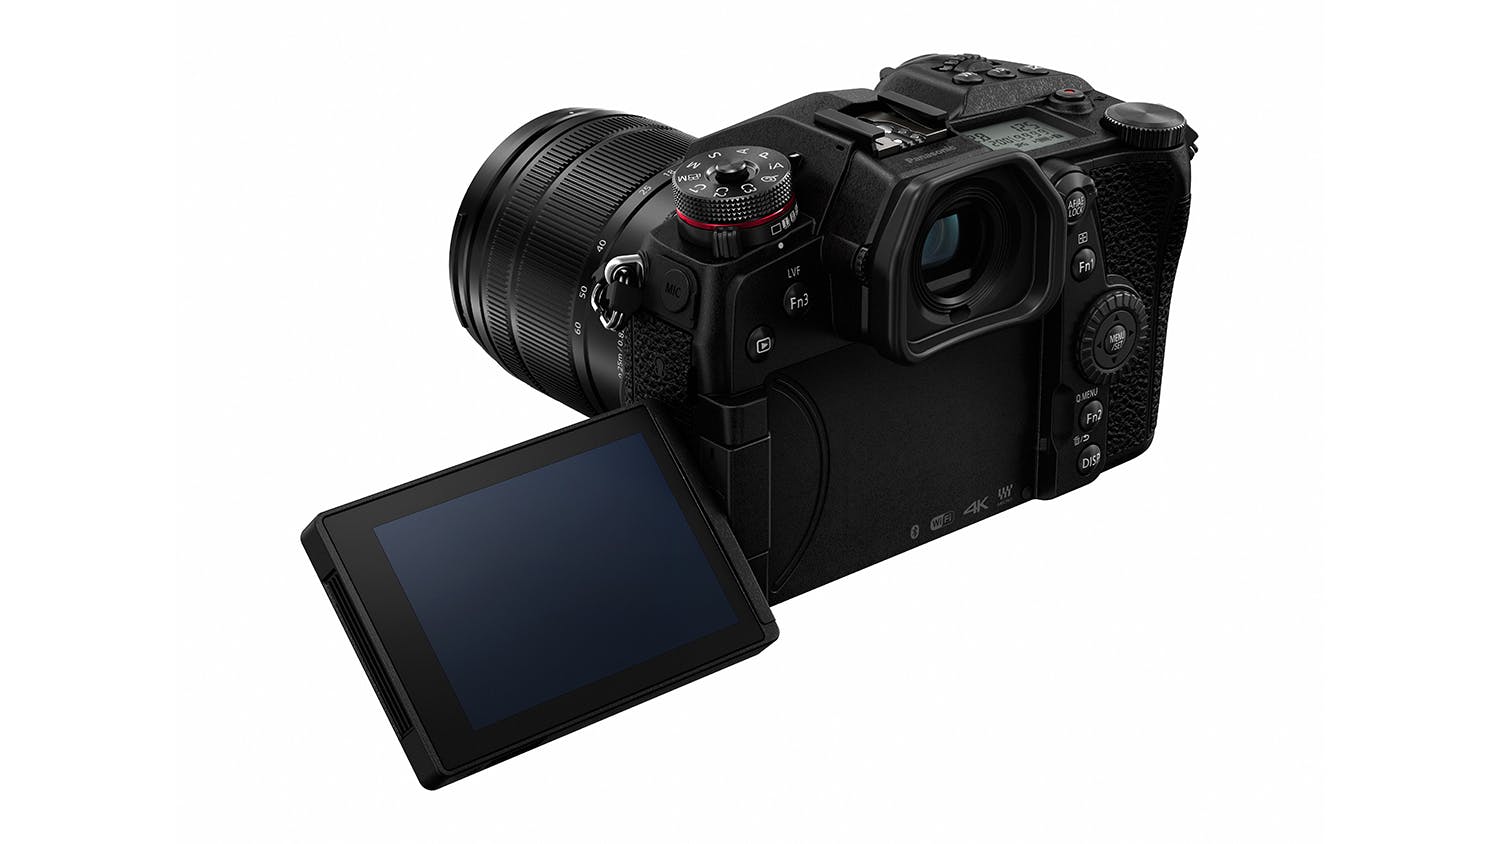 Panasonic Lumix DC-G9 Mirrorless Camera with G 12-60mm f/3.5-5.6 Lens